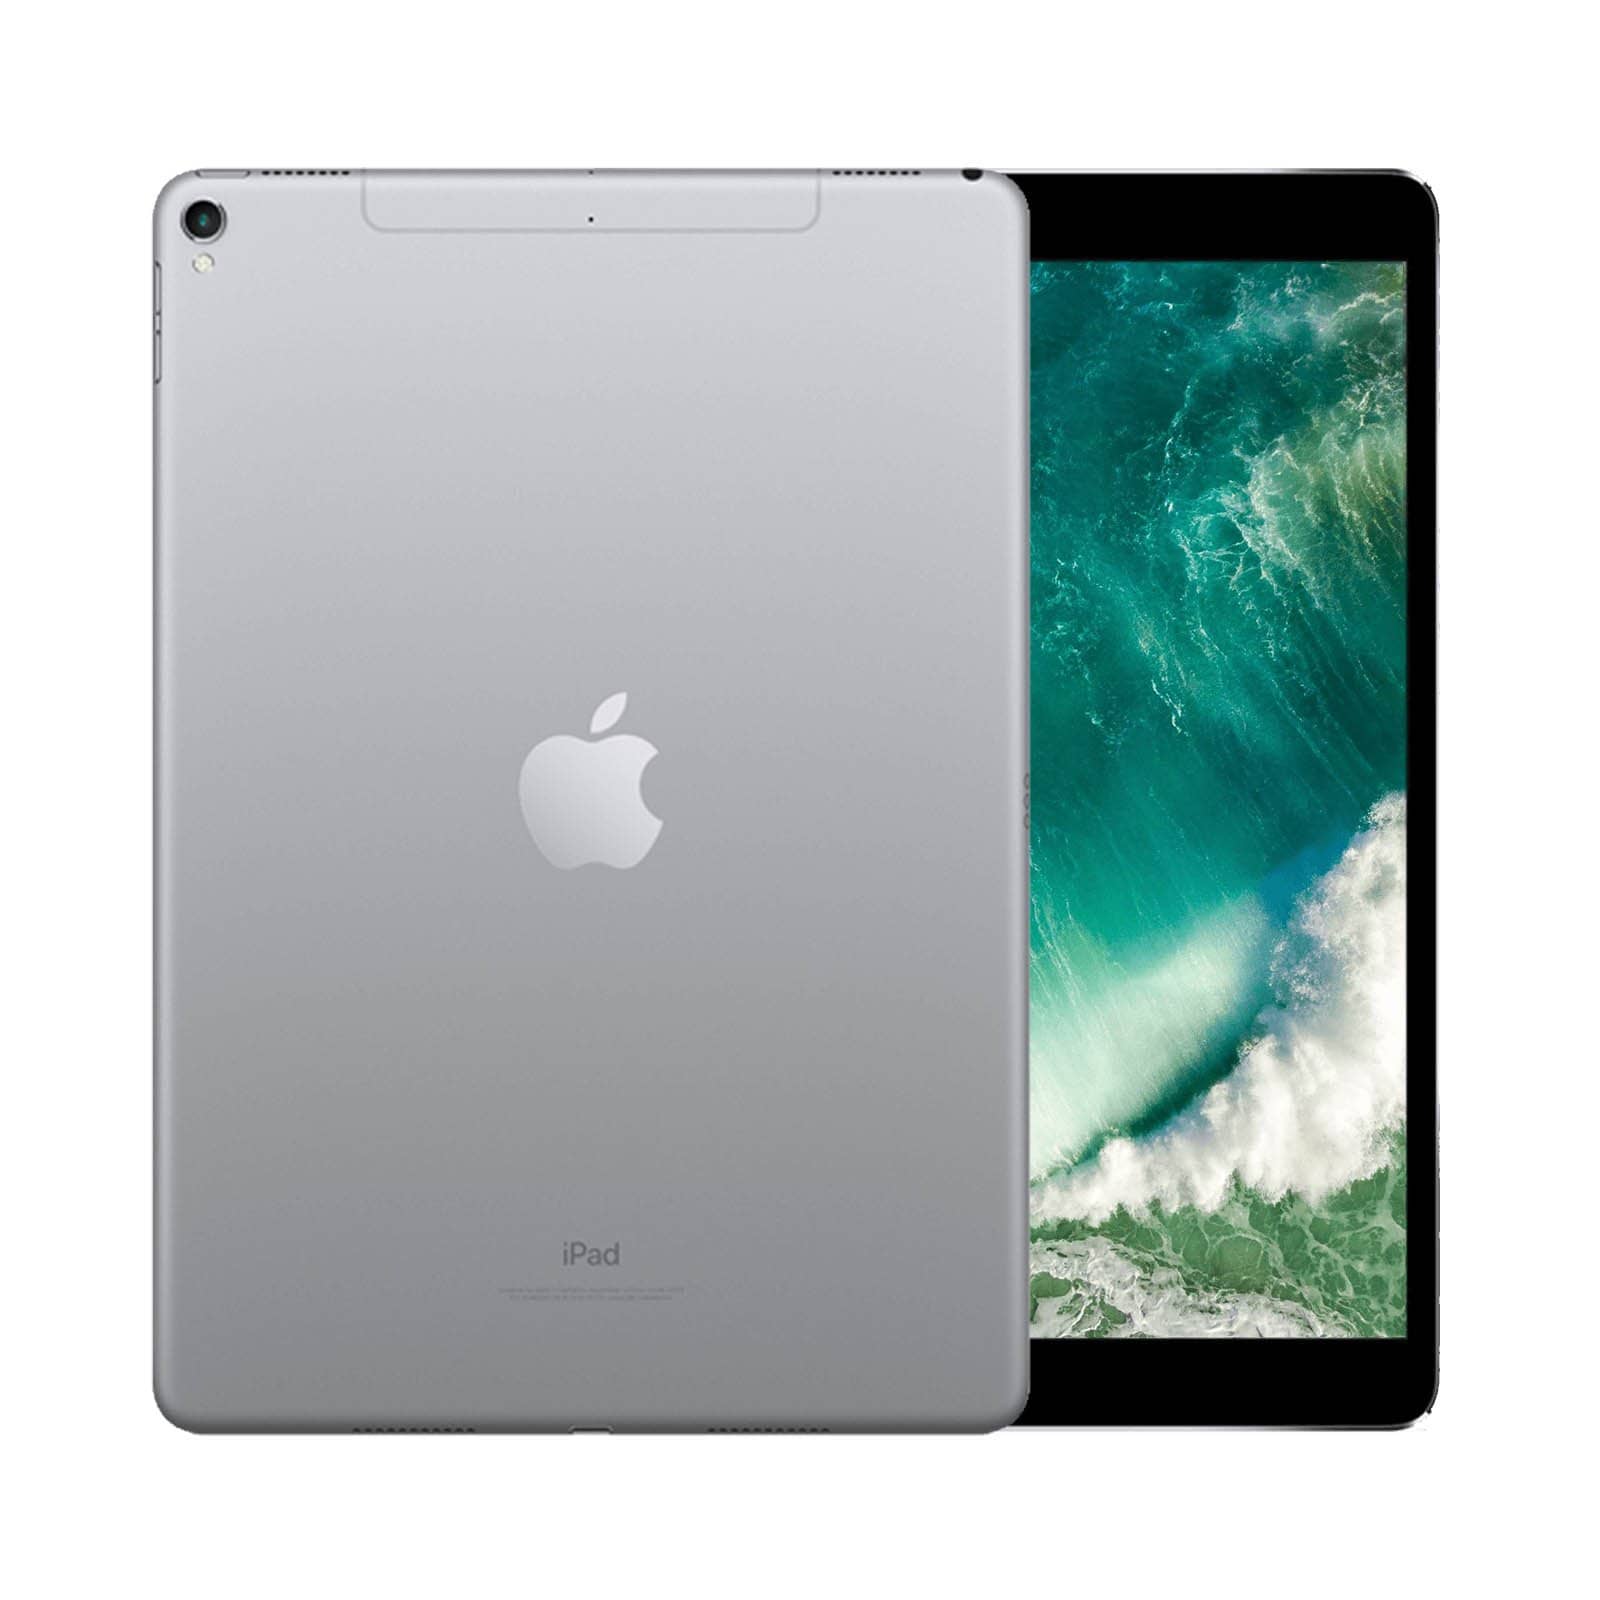 iPad Pro 10.5 Inch 64GB Space Grey Pristine - Unlocked 64GB Space Grey Pristine